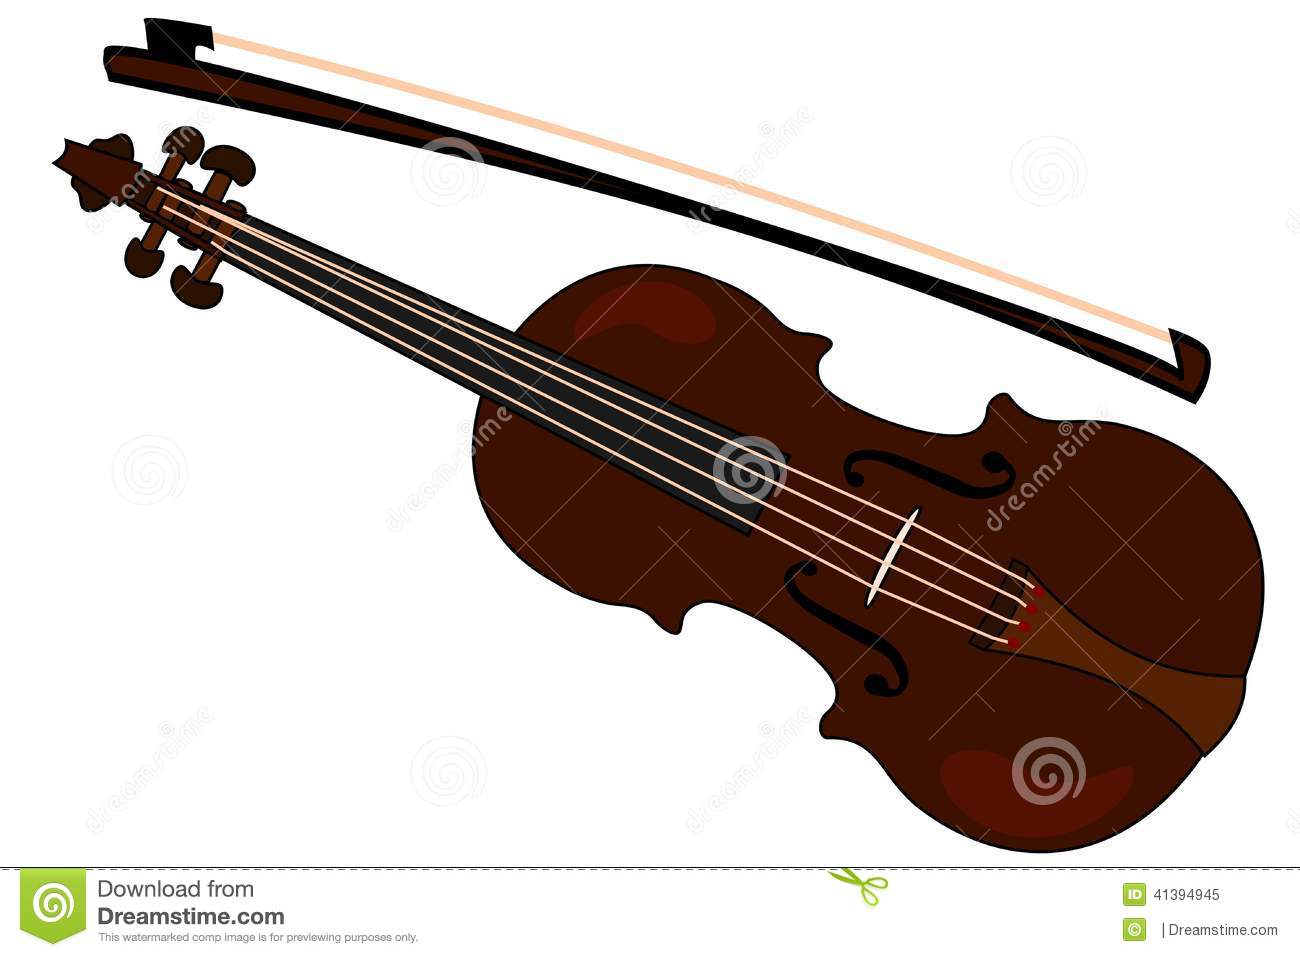 Violin Clipart Stock Vector   Image  41394945